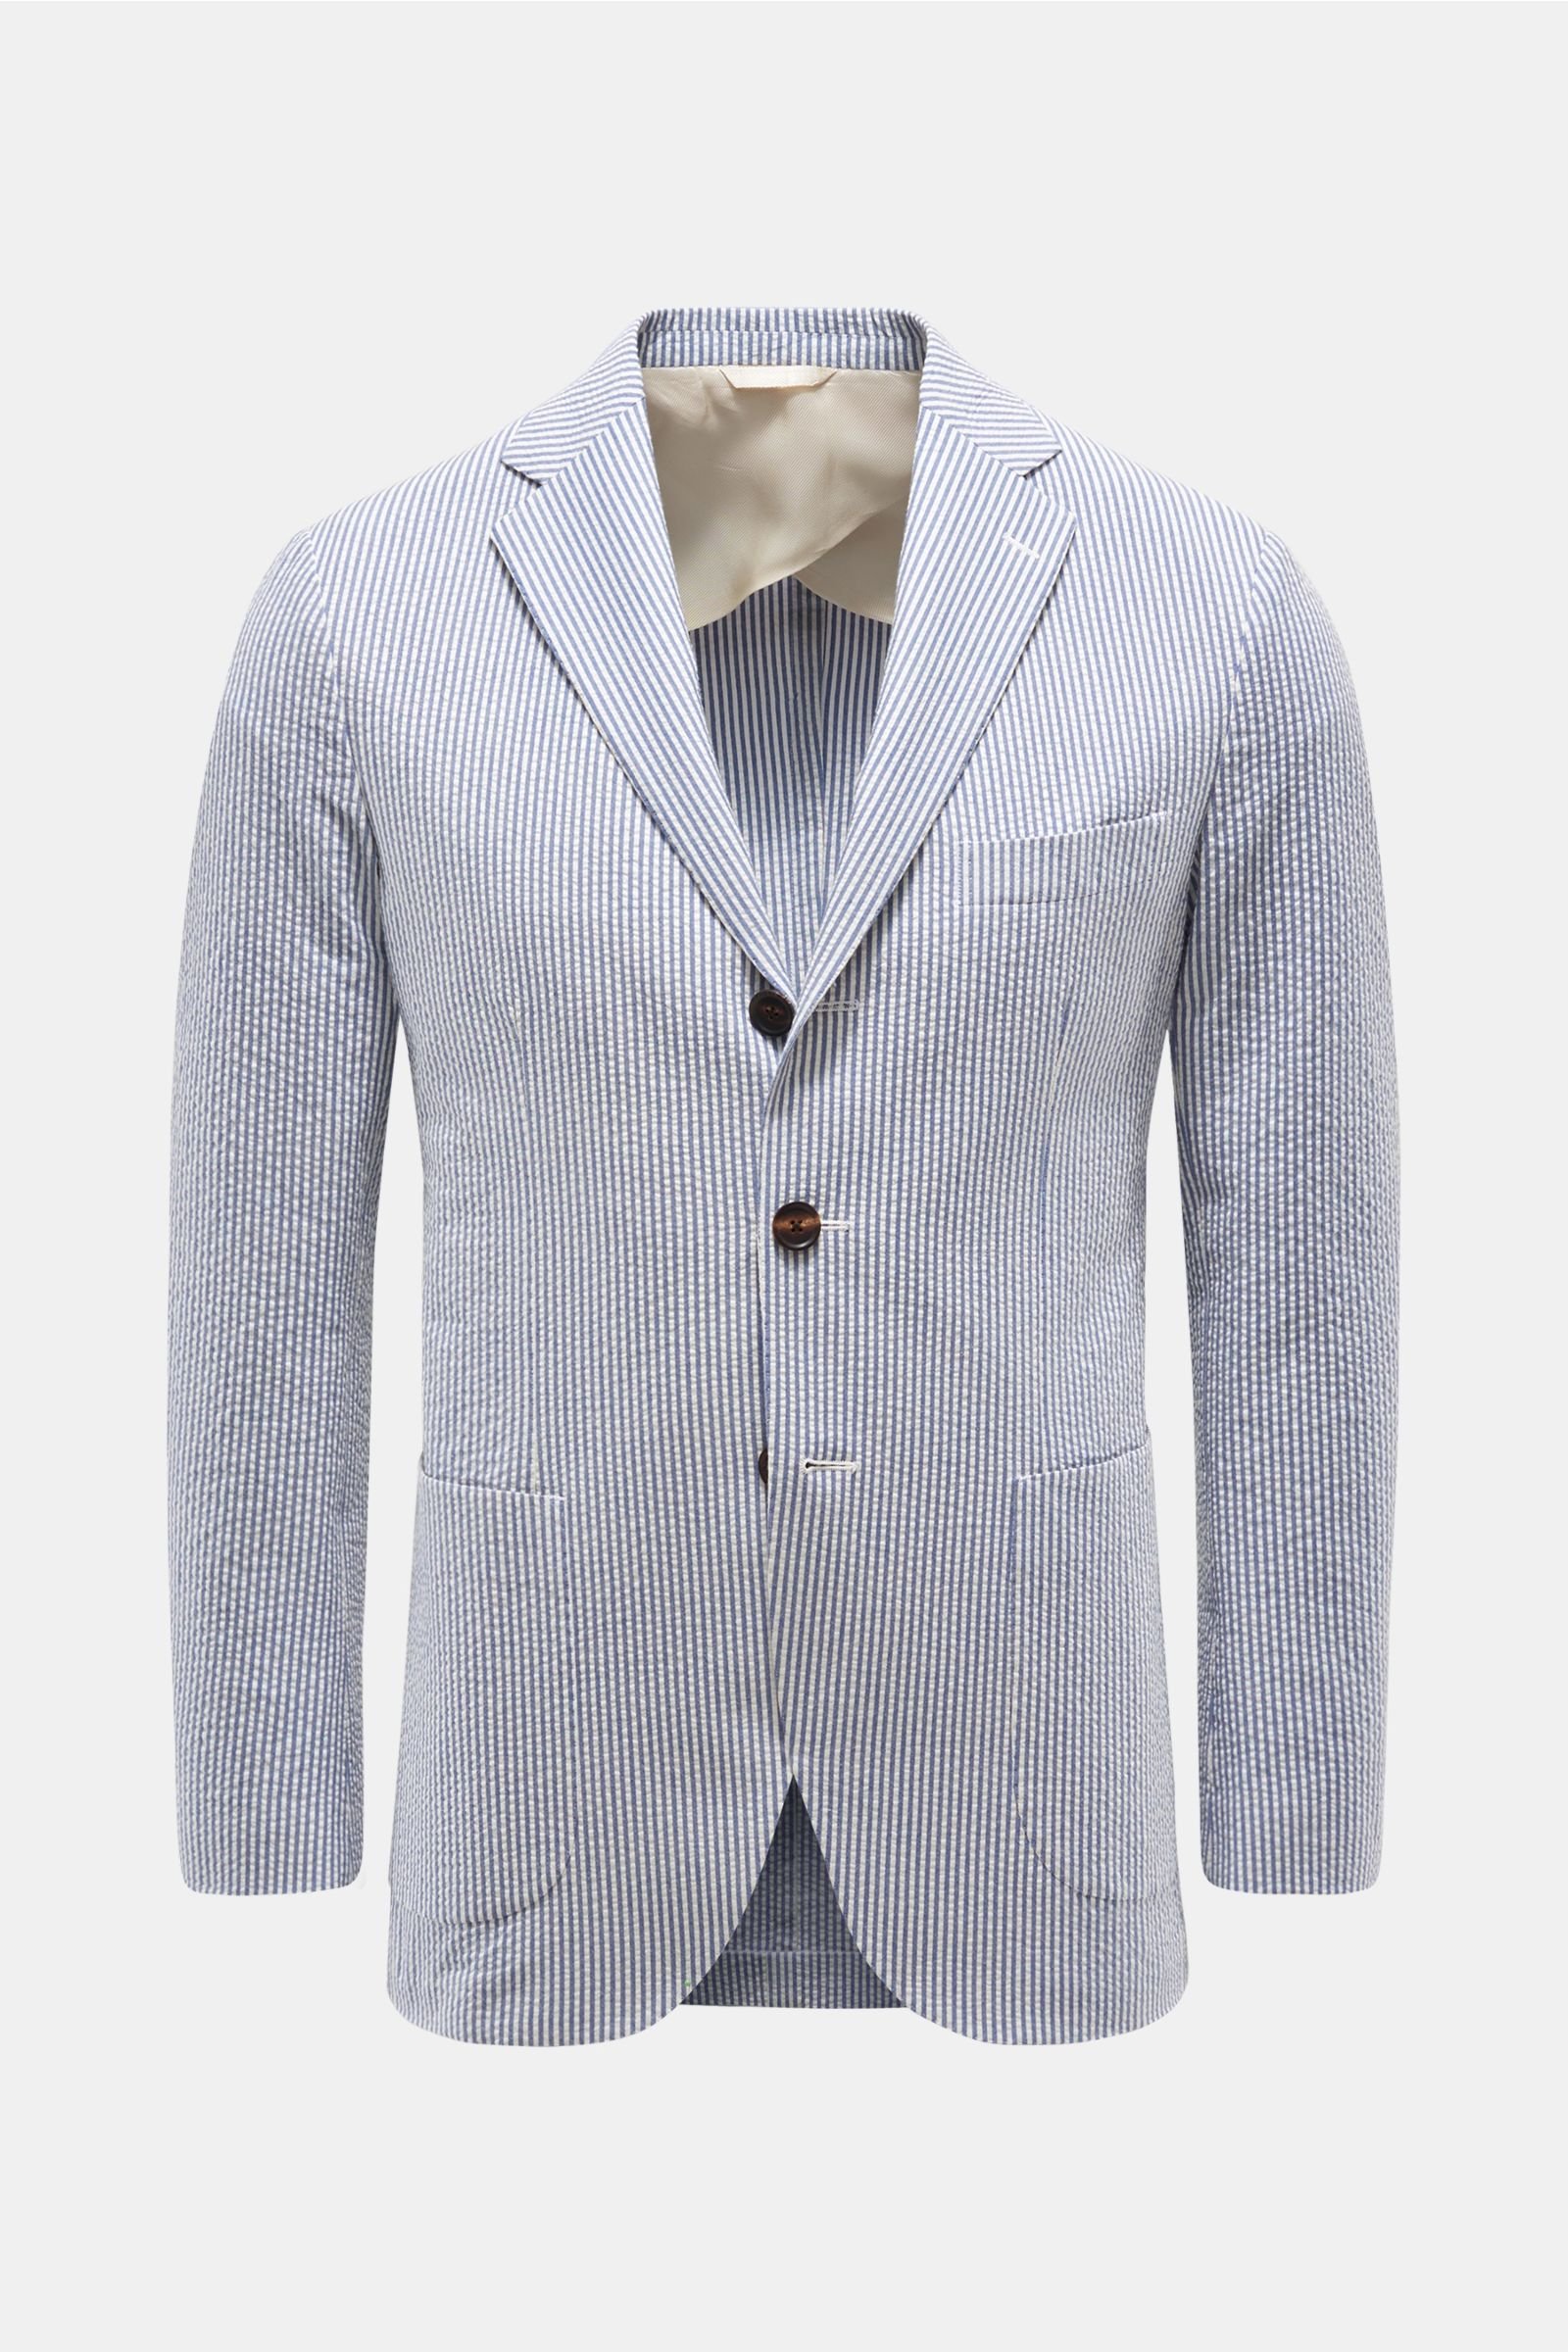 Seersucker smart-casual jacket 'Aanzio' grey-blue/white striped